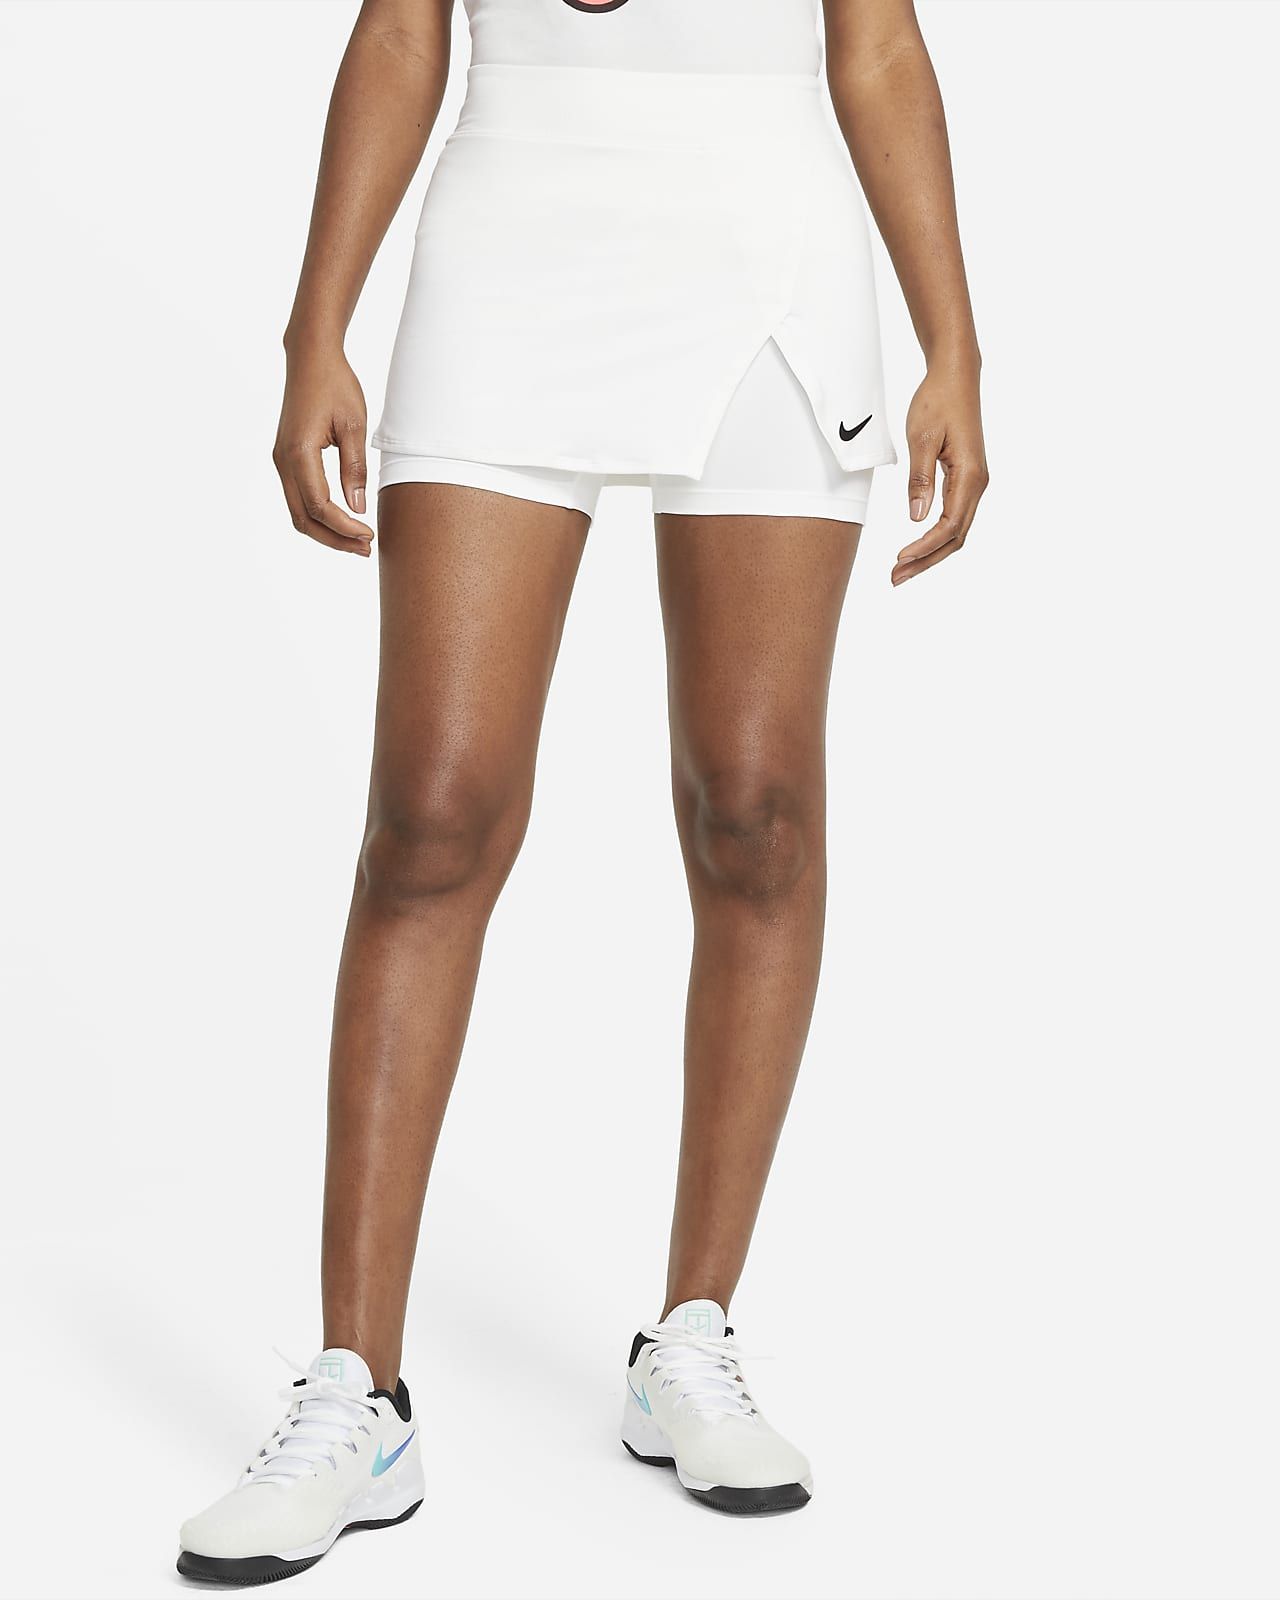 Women's Tennis Skirt | Nike (US)